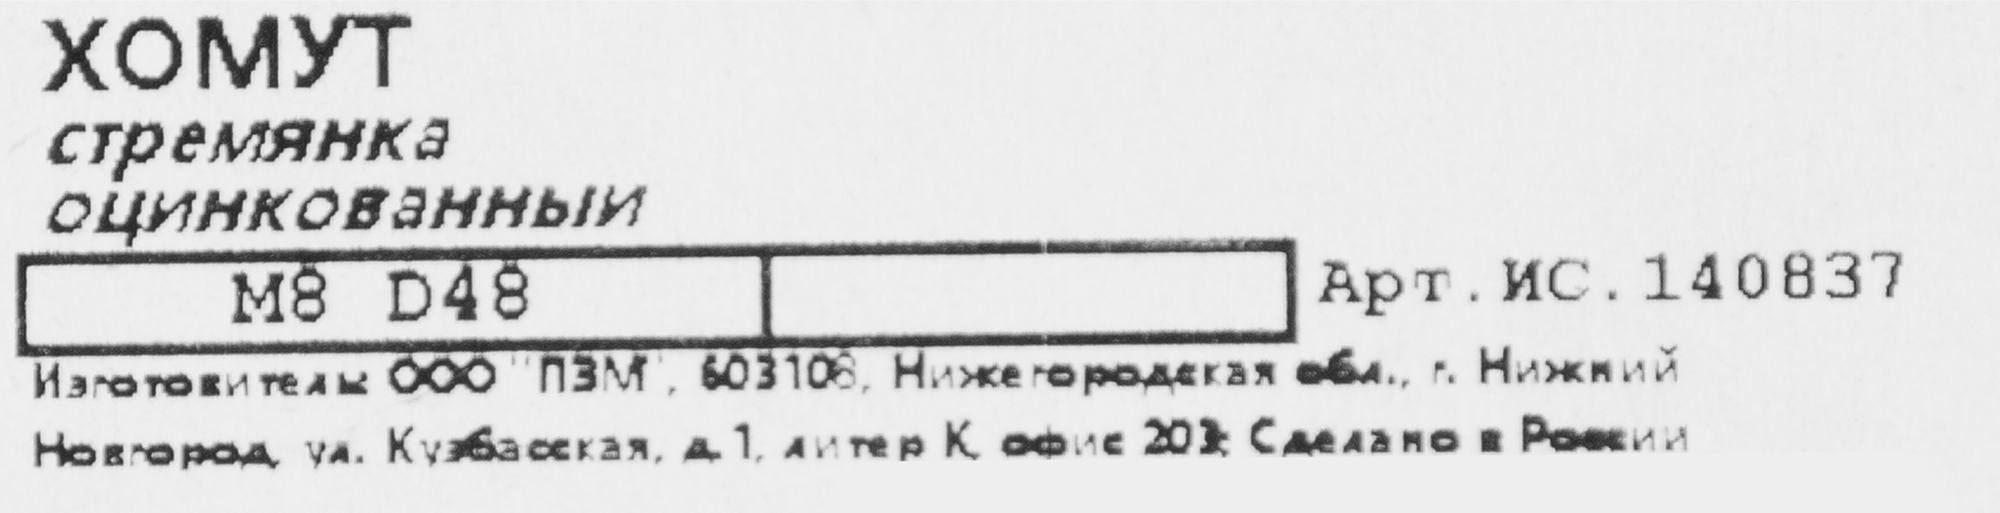 Хомут стремянка М8 D48 117x60 мм - фотография № 3